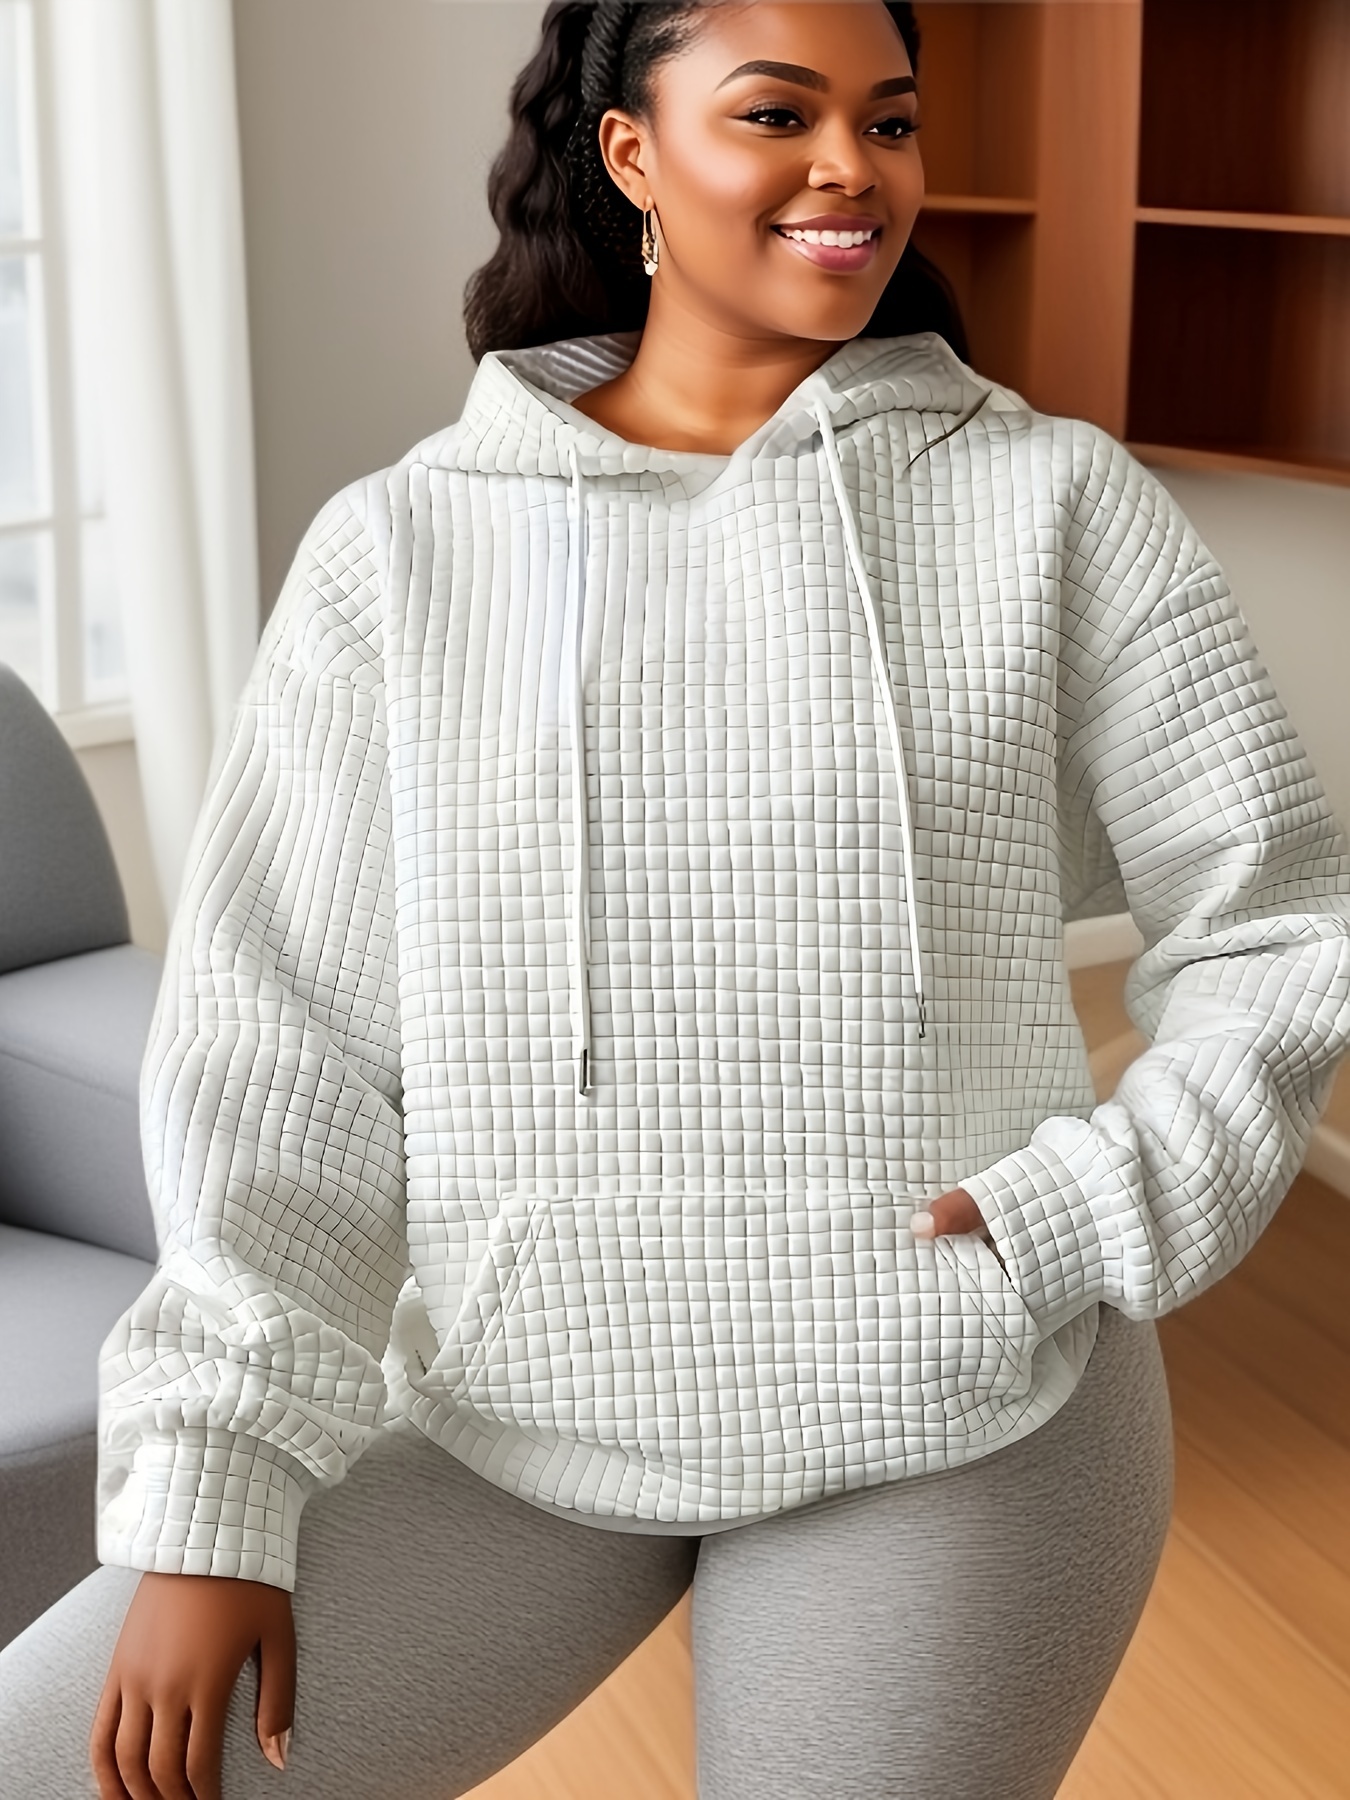 Aayomet Womens Hoodies Plus Size Cowl Neck Sweatshirts for Women